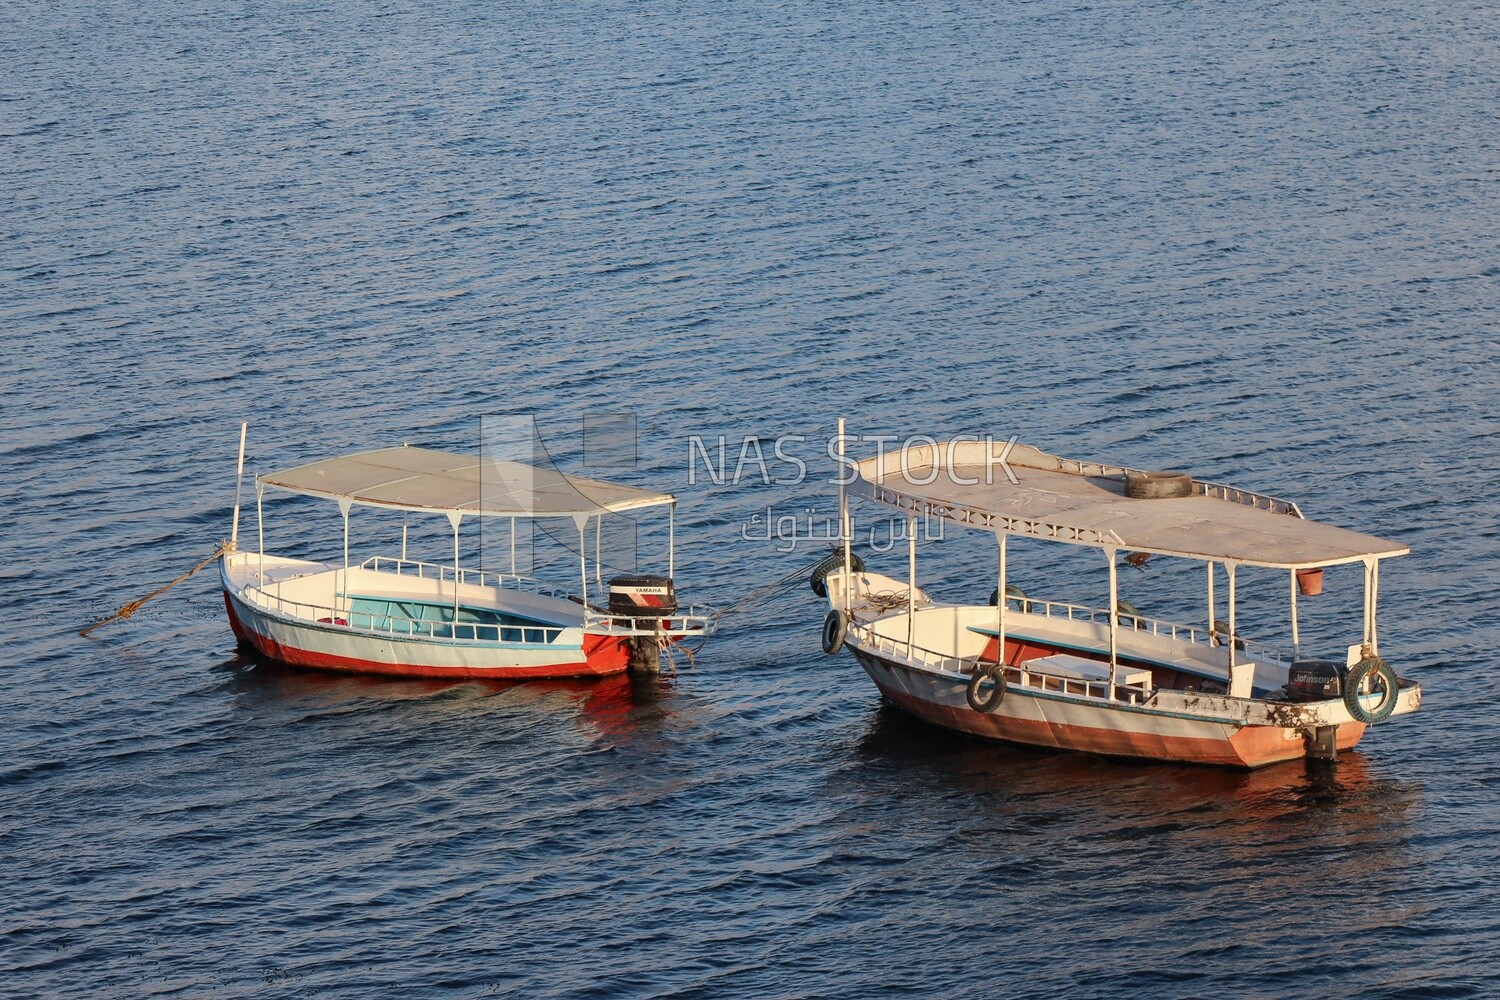 Nautical boats sailing on the Nile River,Egypt